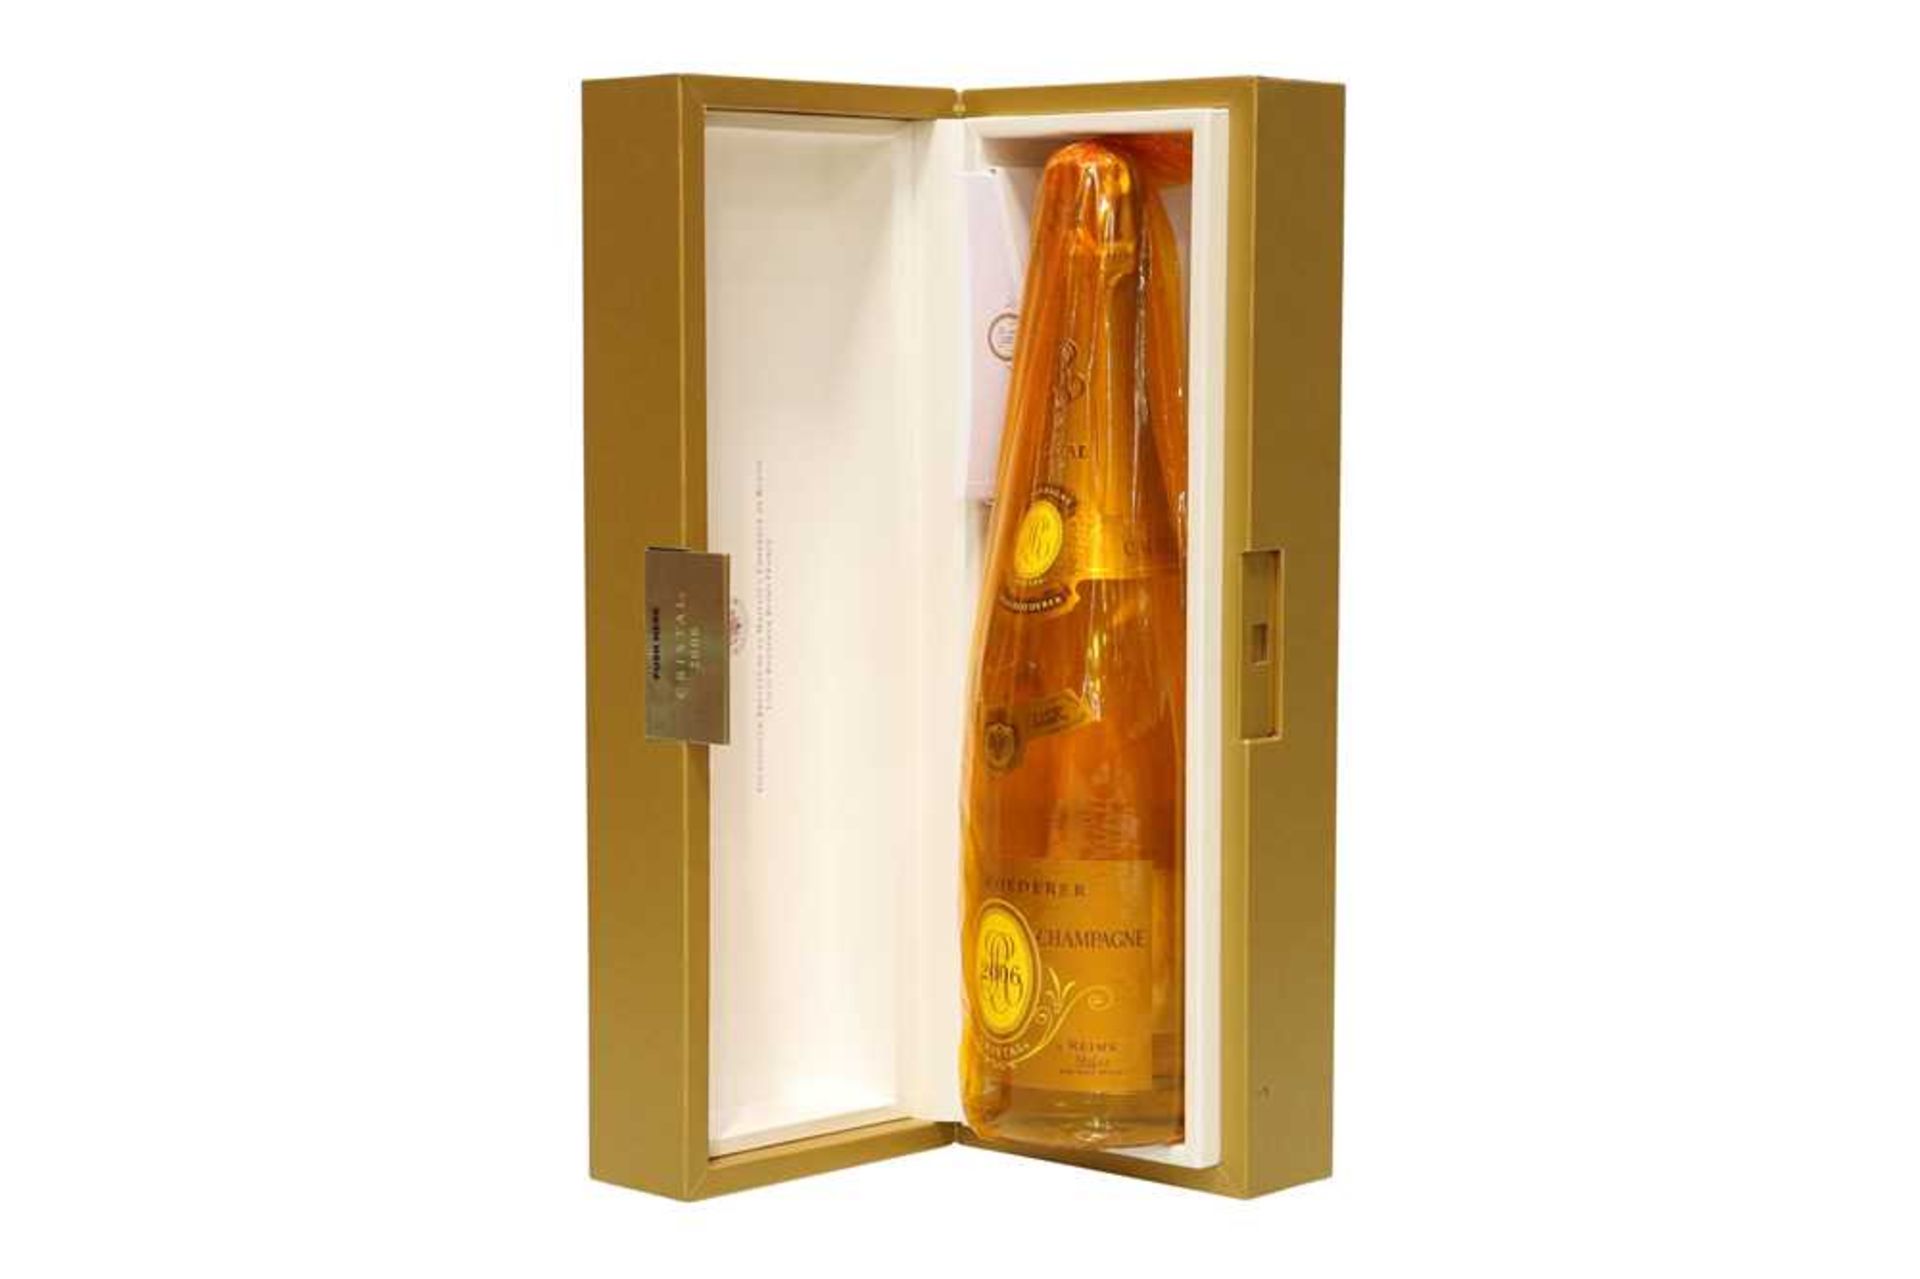 Louis Roederer, Cristal, Reims, 2006, one bottle - Image 2 of 2